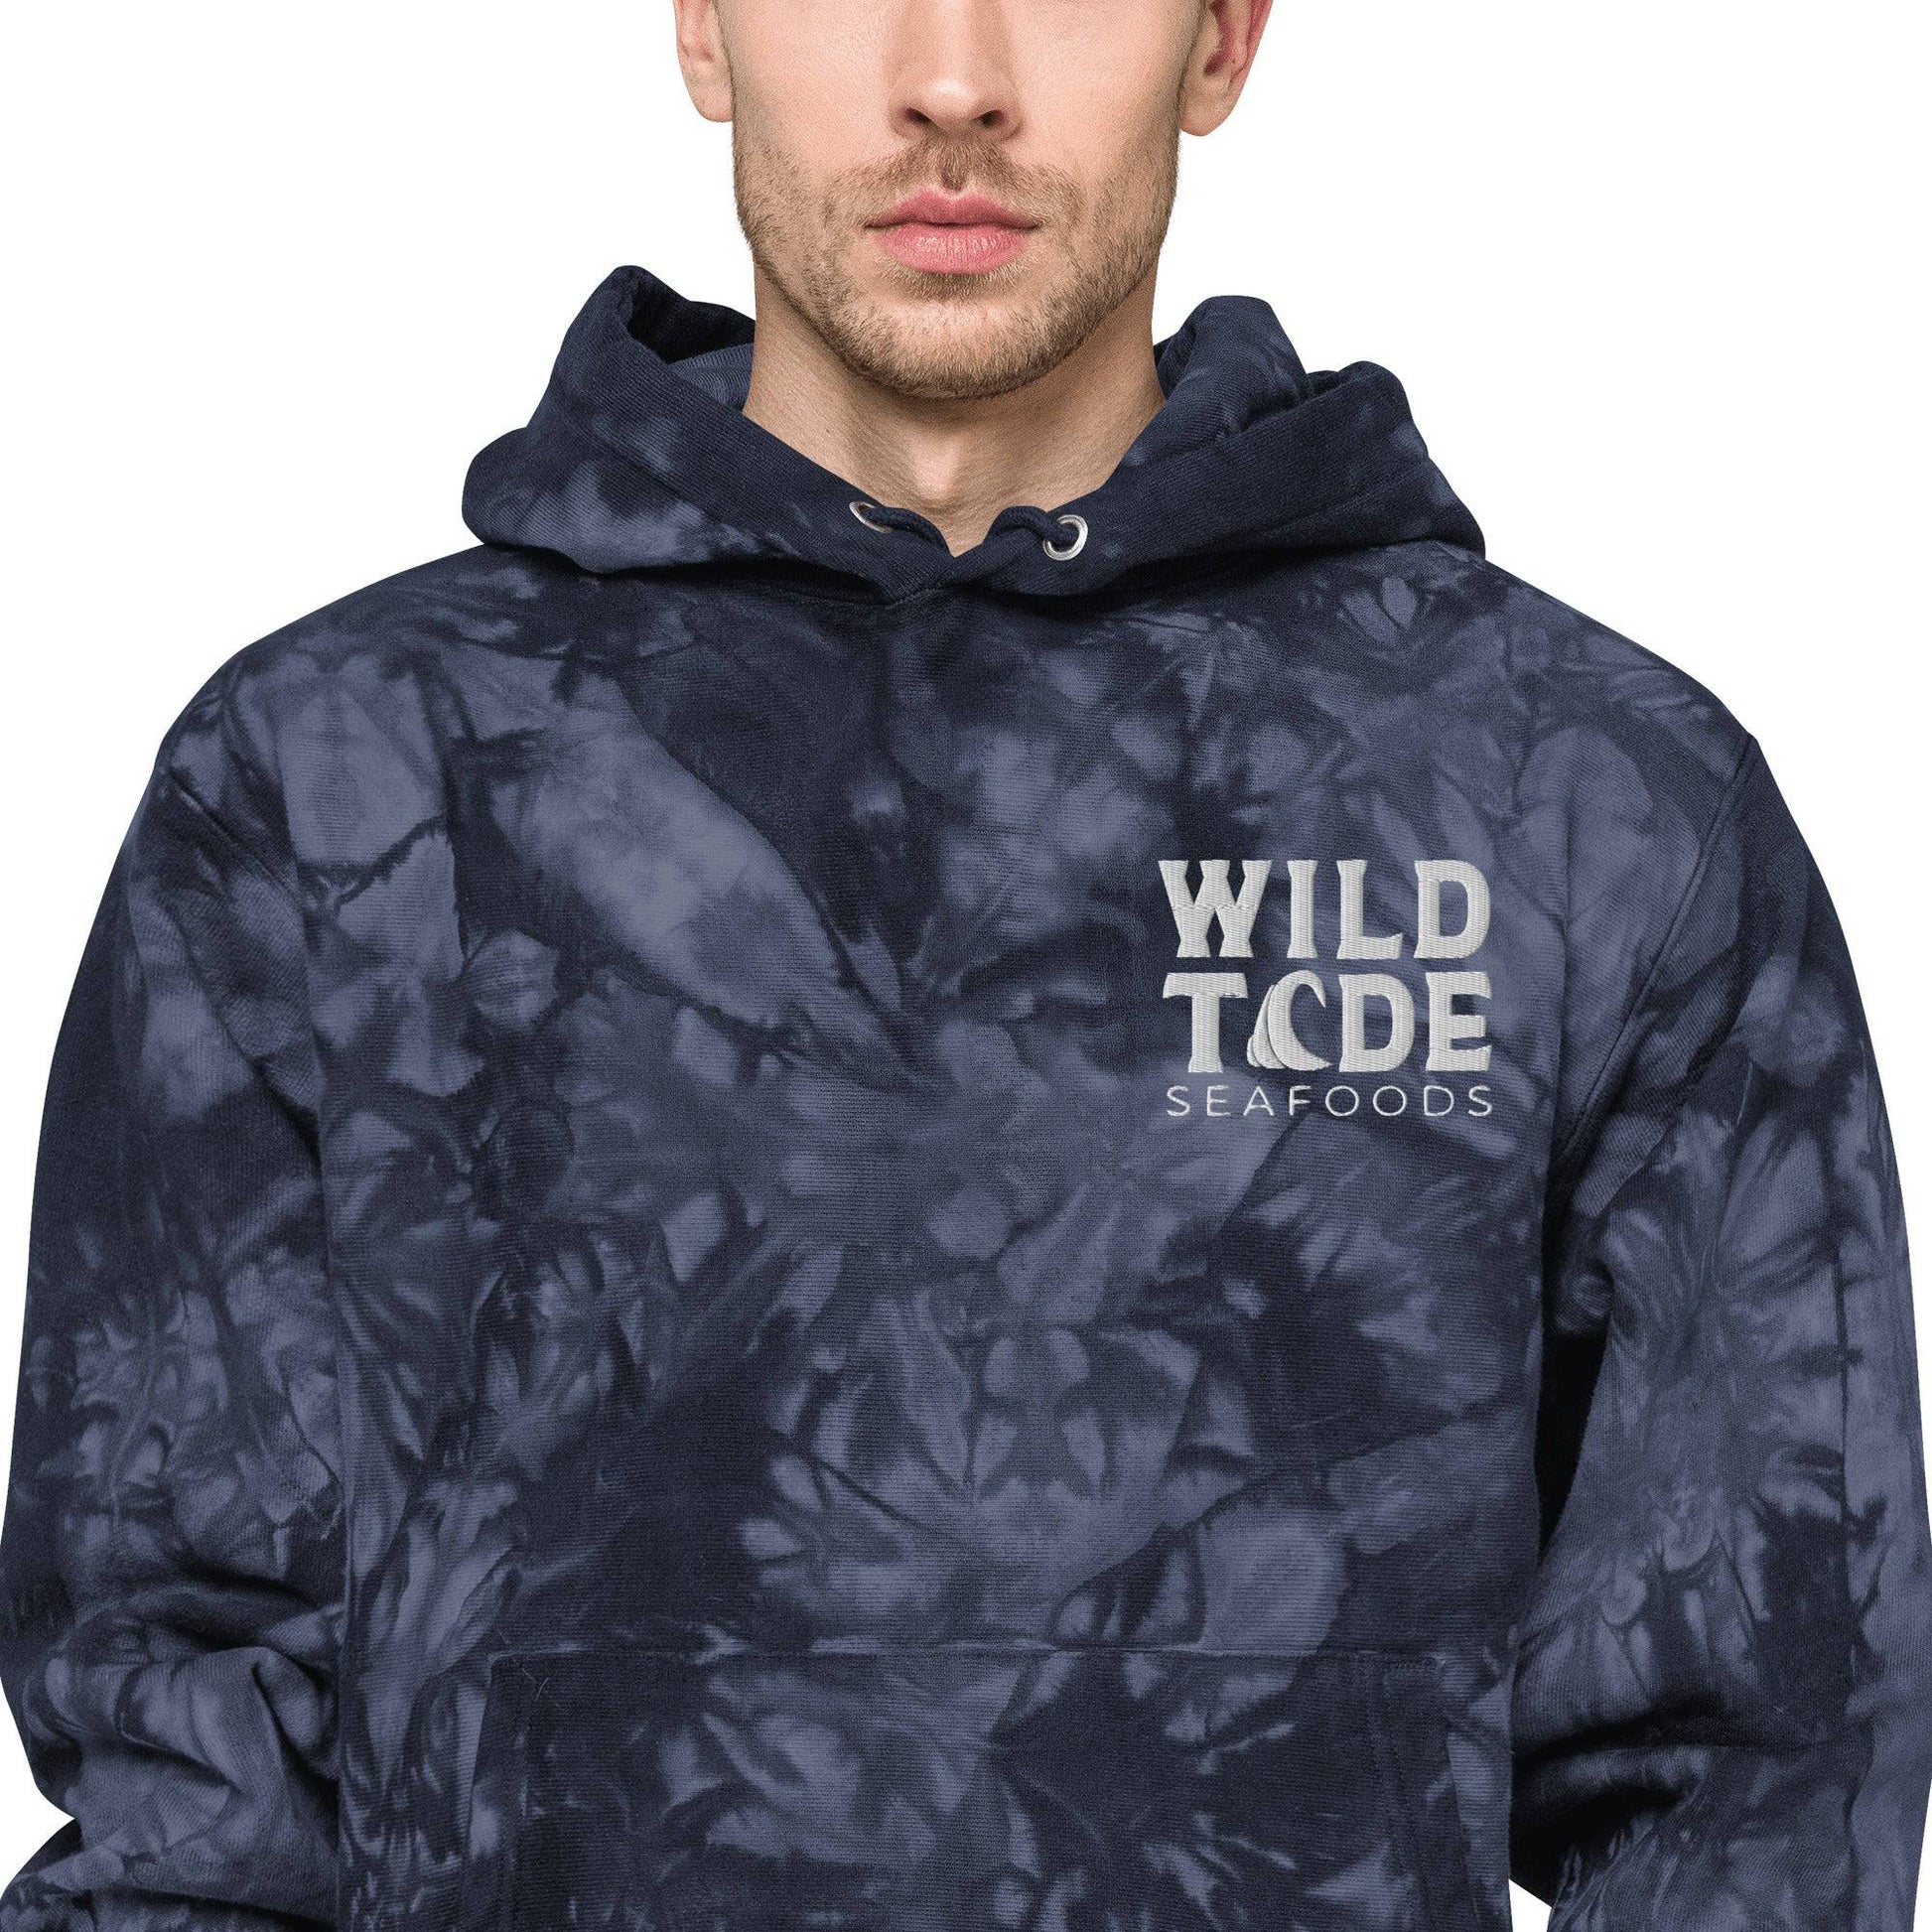 Wild Tide Seafoods Unisex Champion tie-dye hoodie - Wild Tide Seafoods